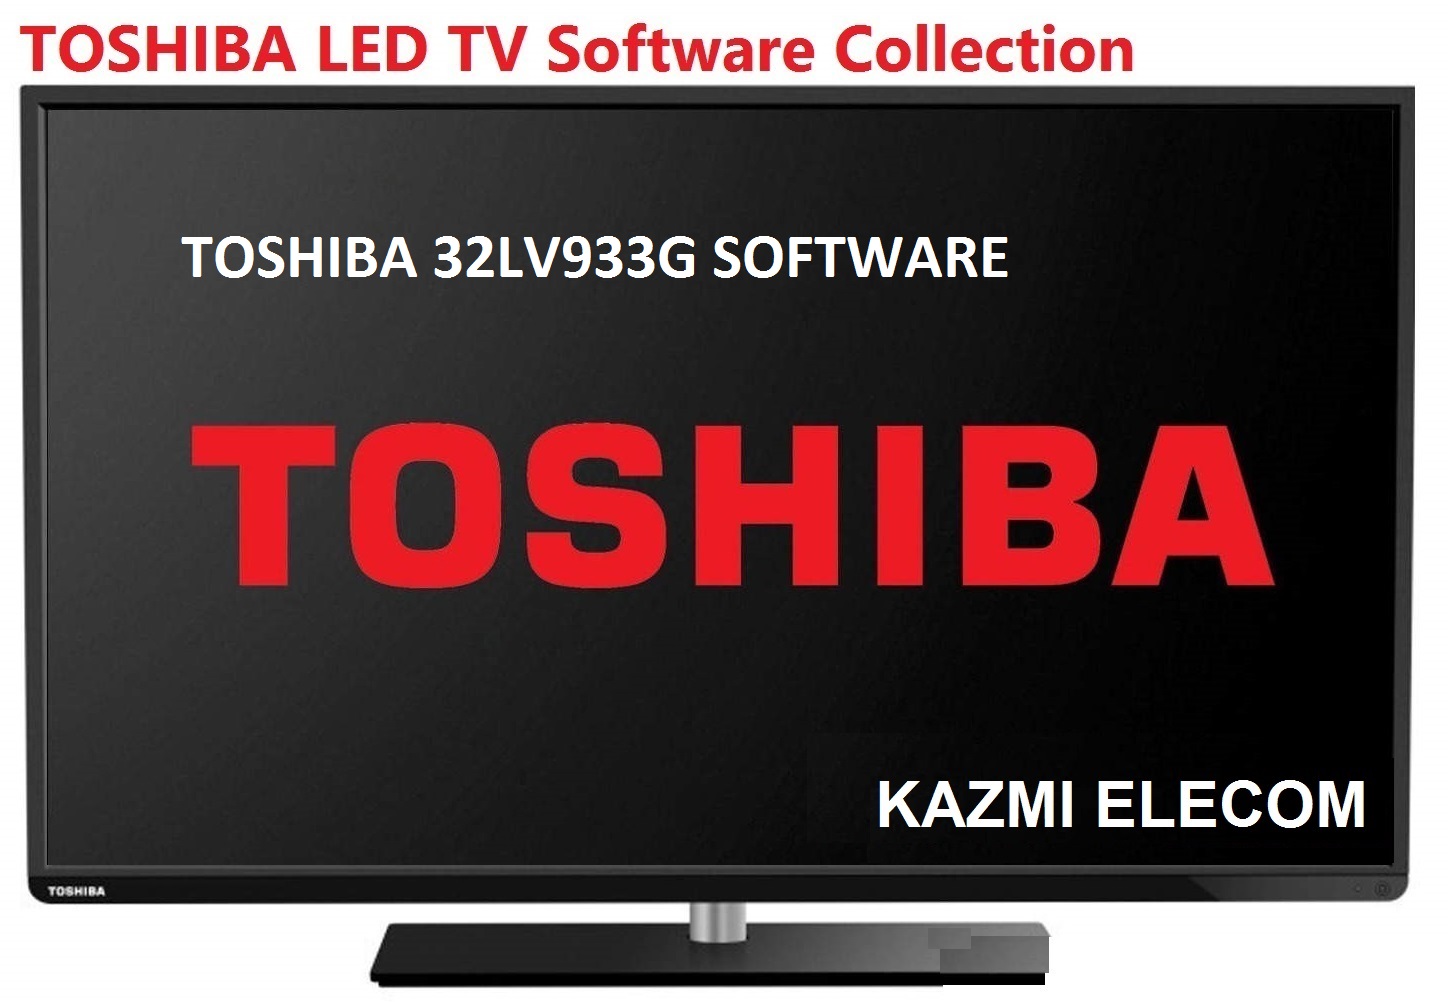 Toshiba 32Lv933G